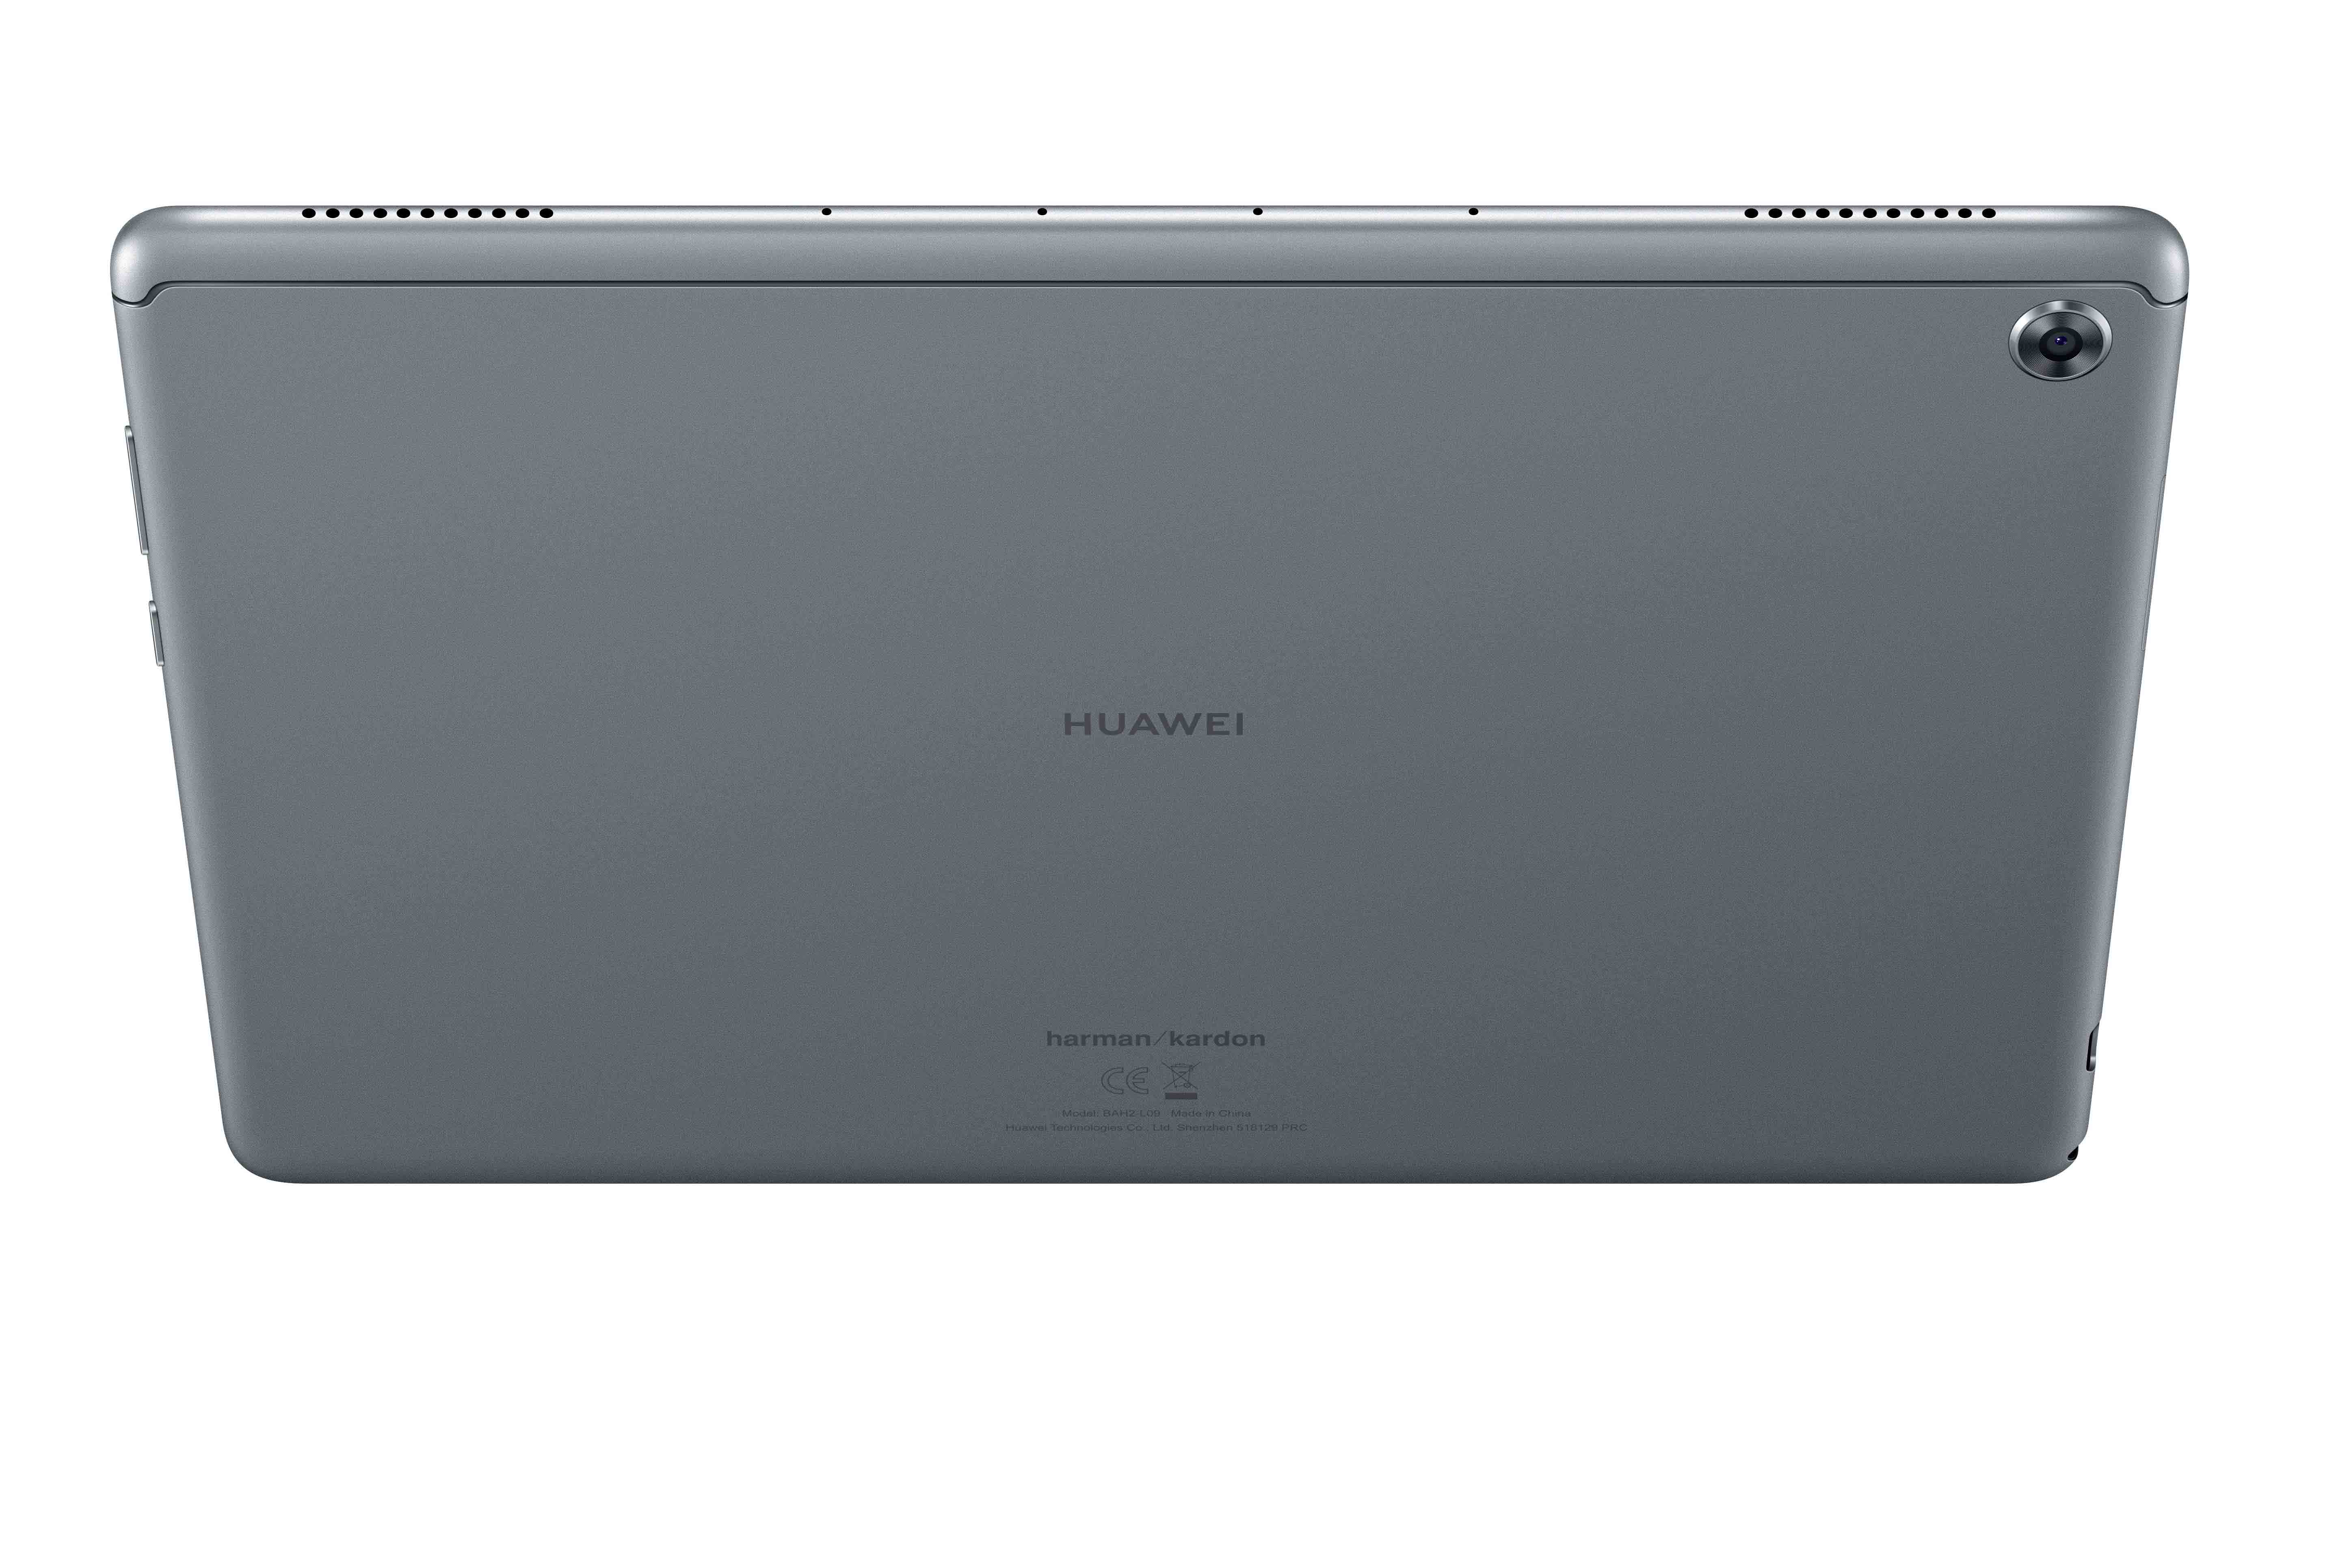 Huawei mediapad m5 lite display showing its back